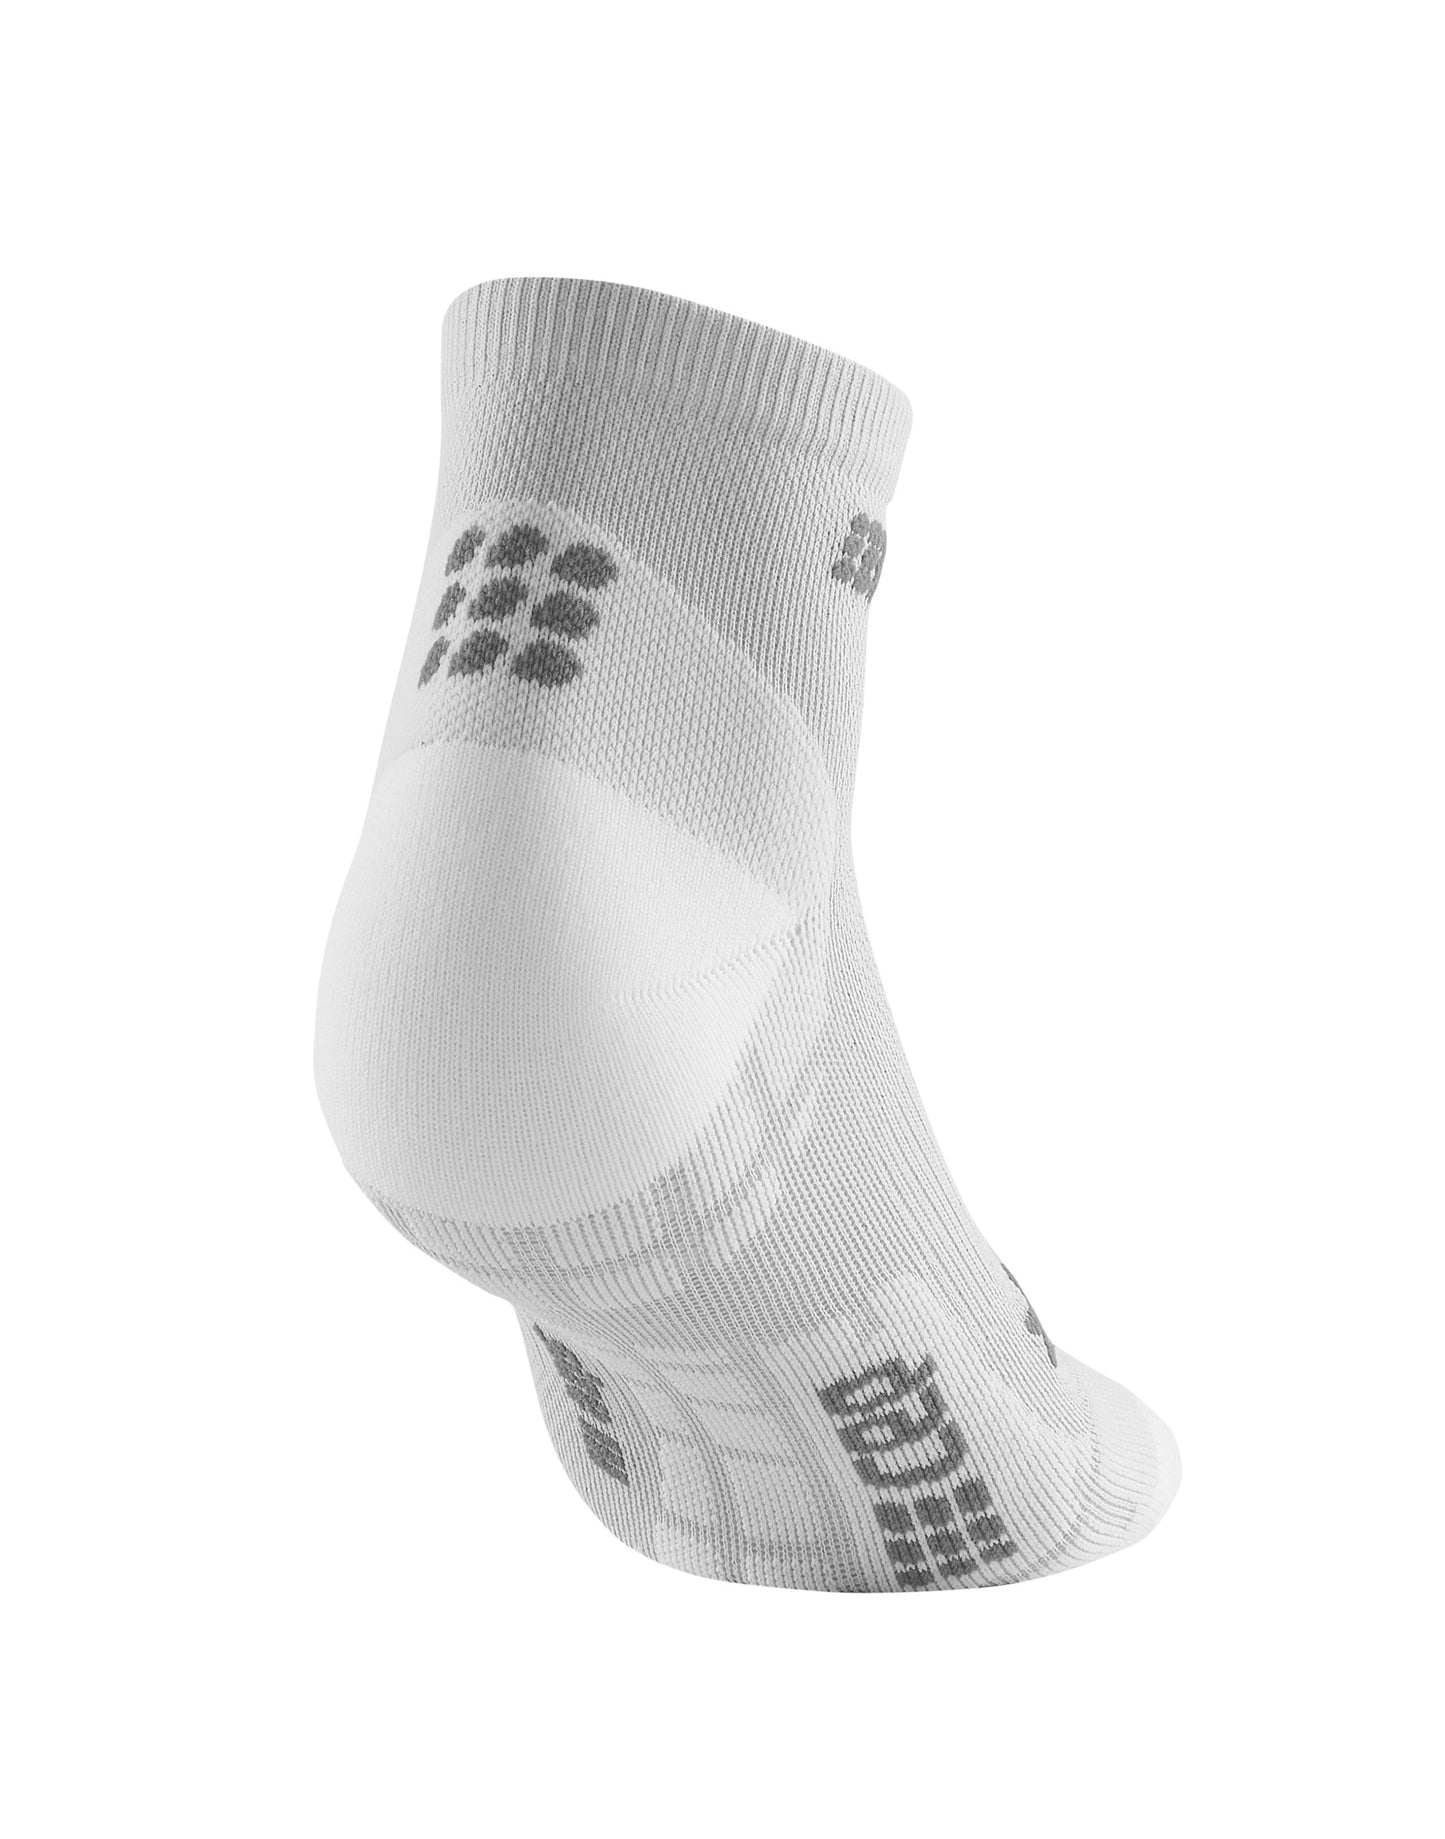 CEP Ultralight  Low Cut Compression Sock Women's - Carbon White